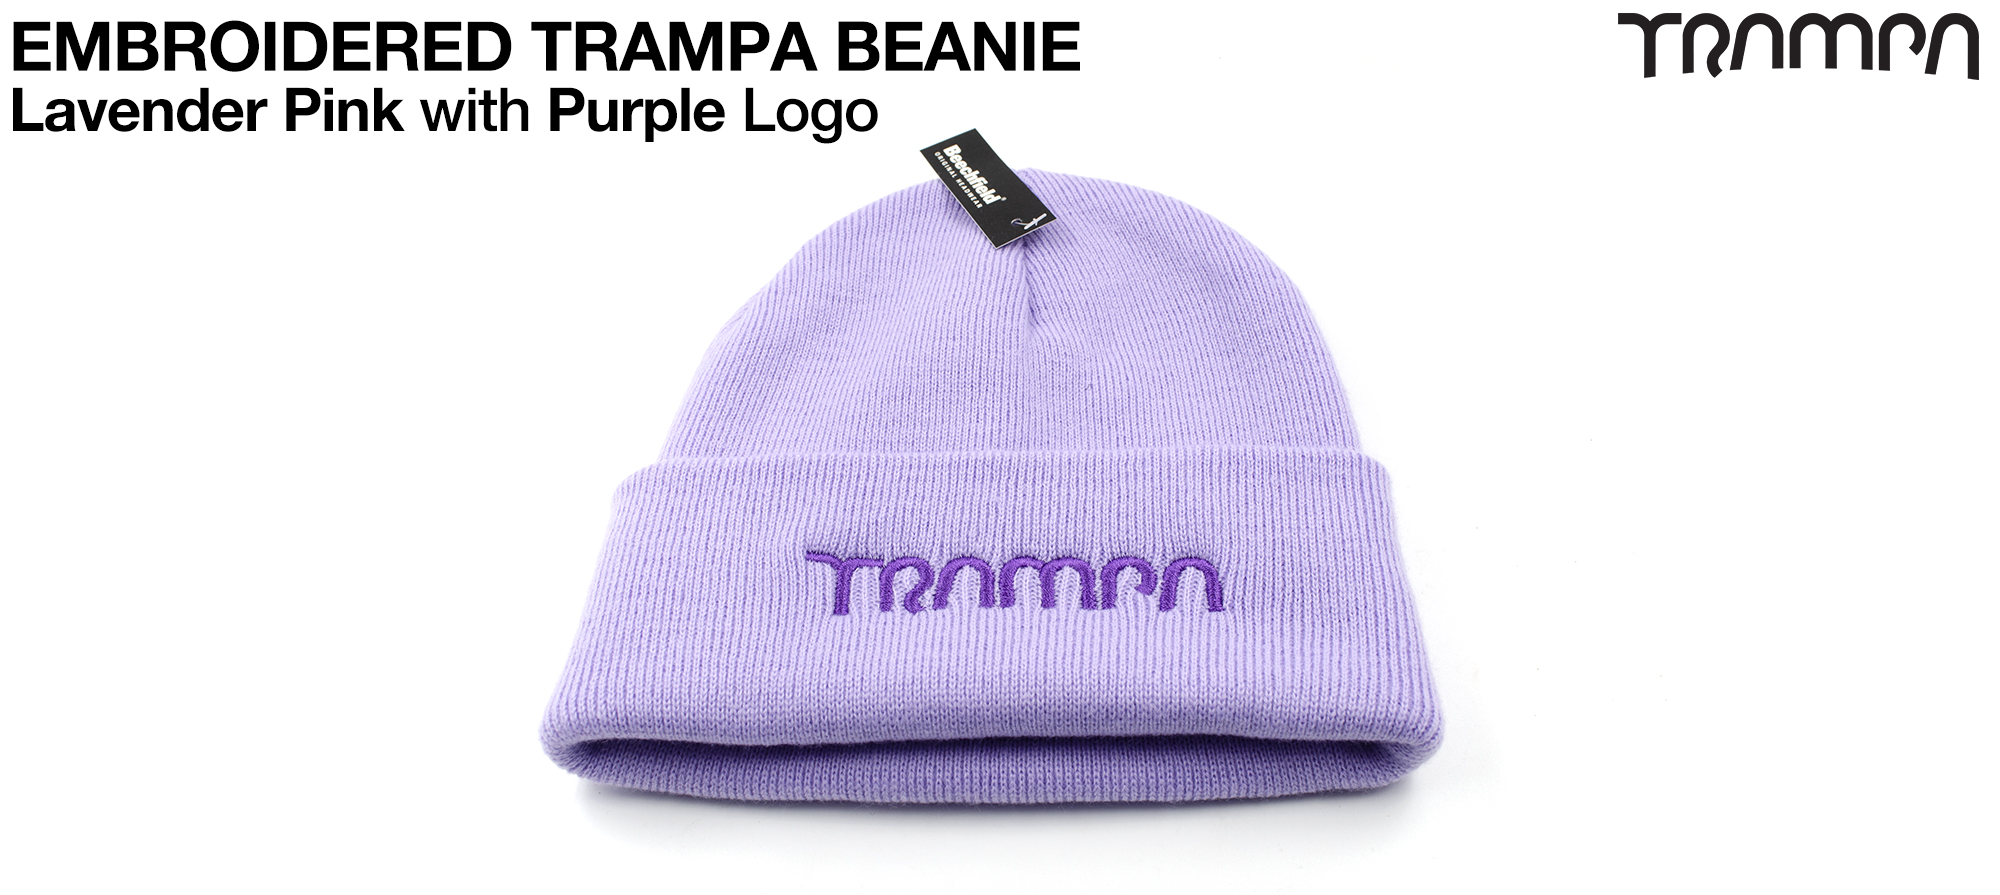 Lavender PINK Beanie with PURPLE TRAMPA logo